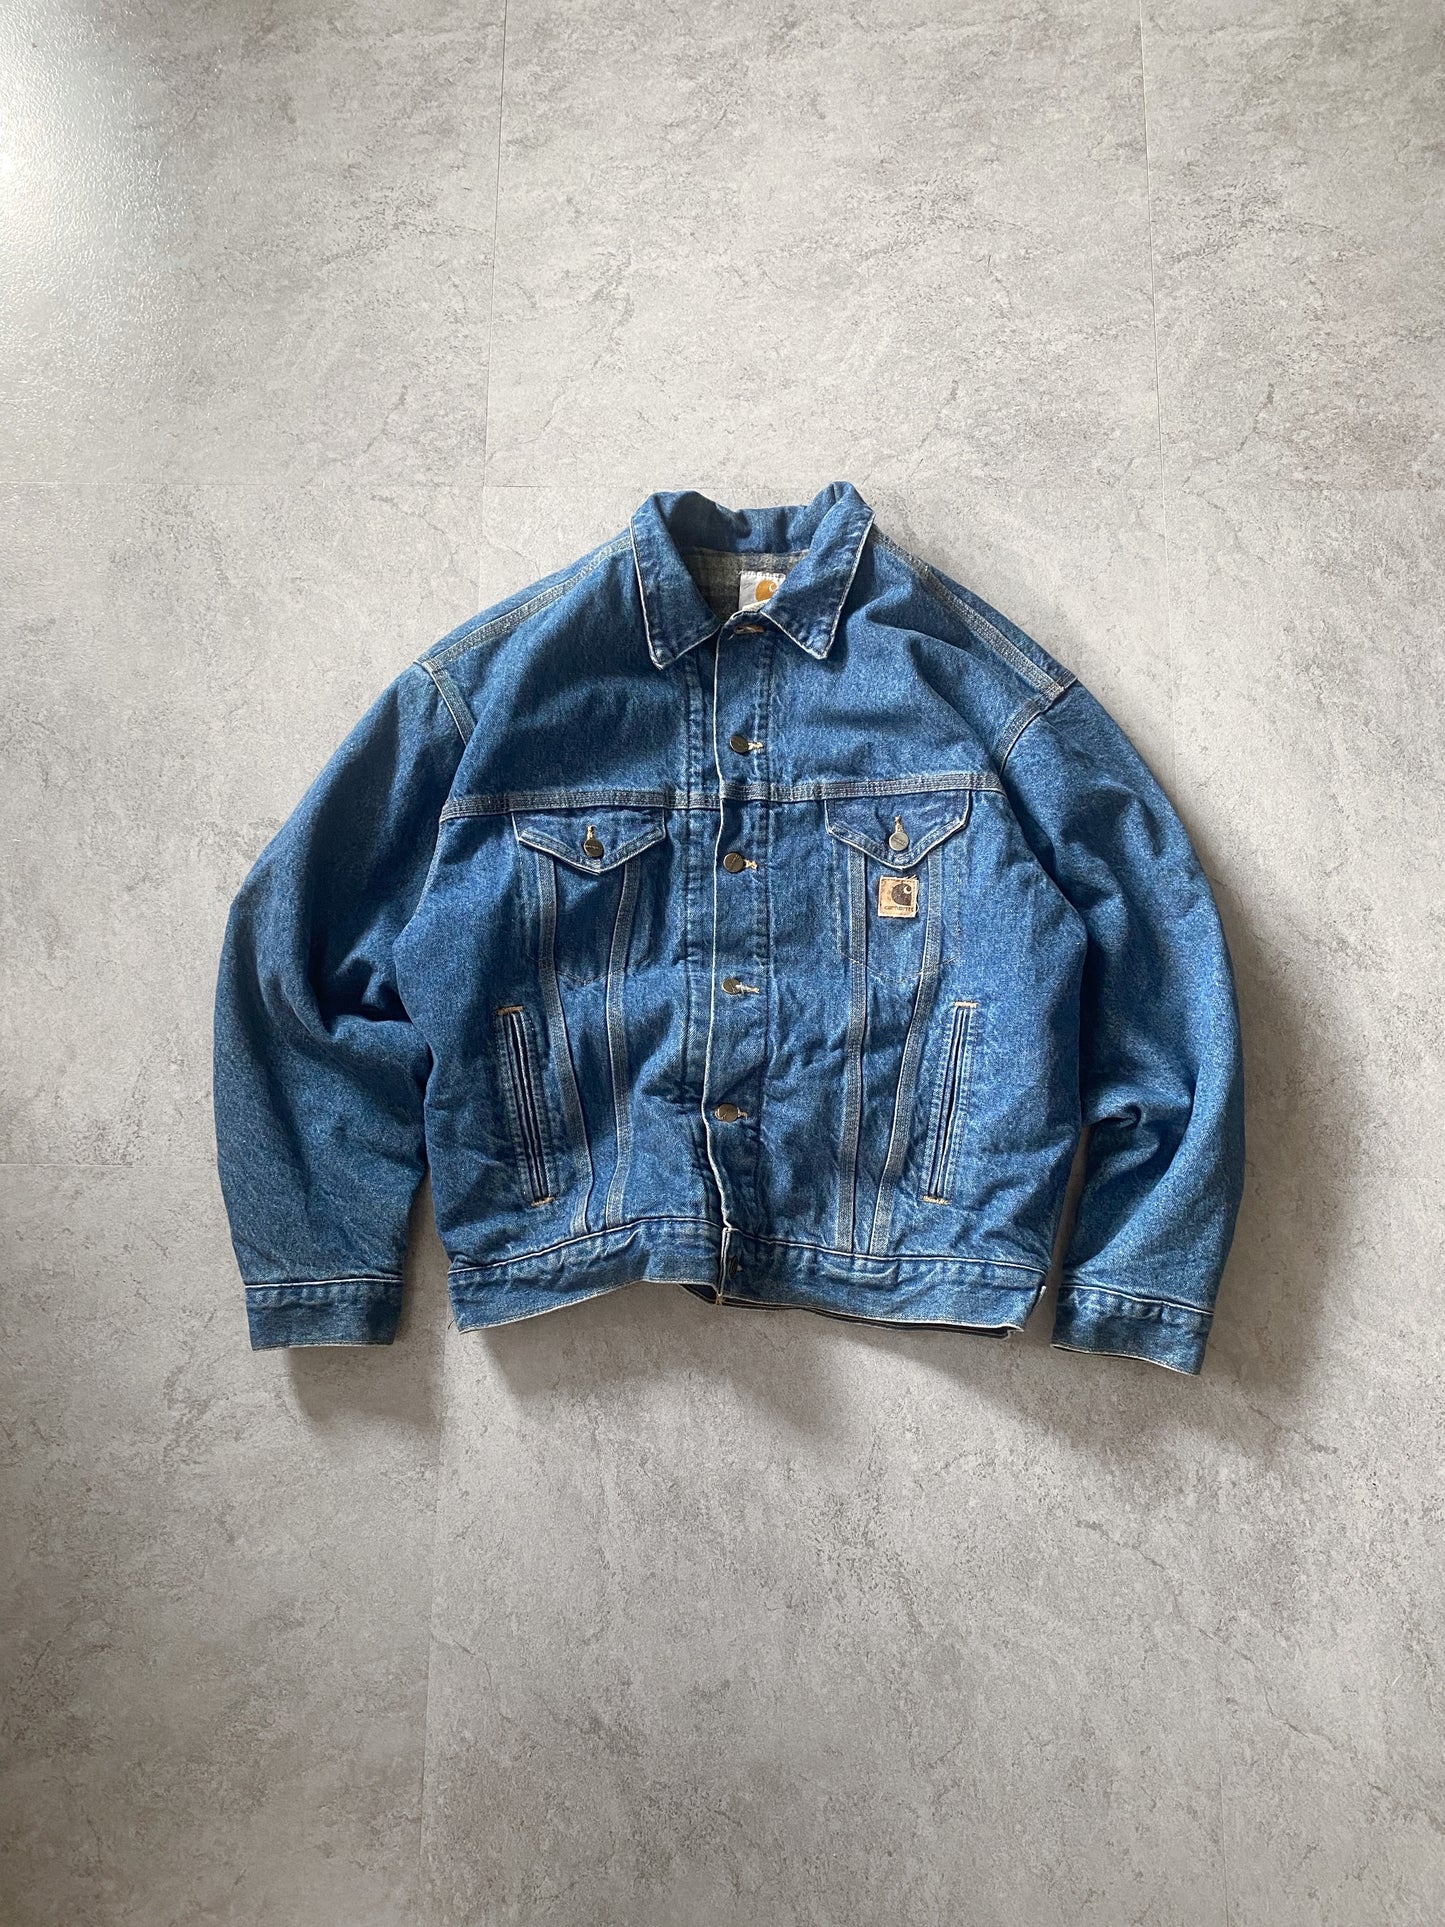 1990s Vintage Carhartt Denim Jacket